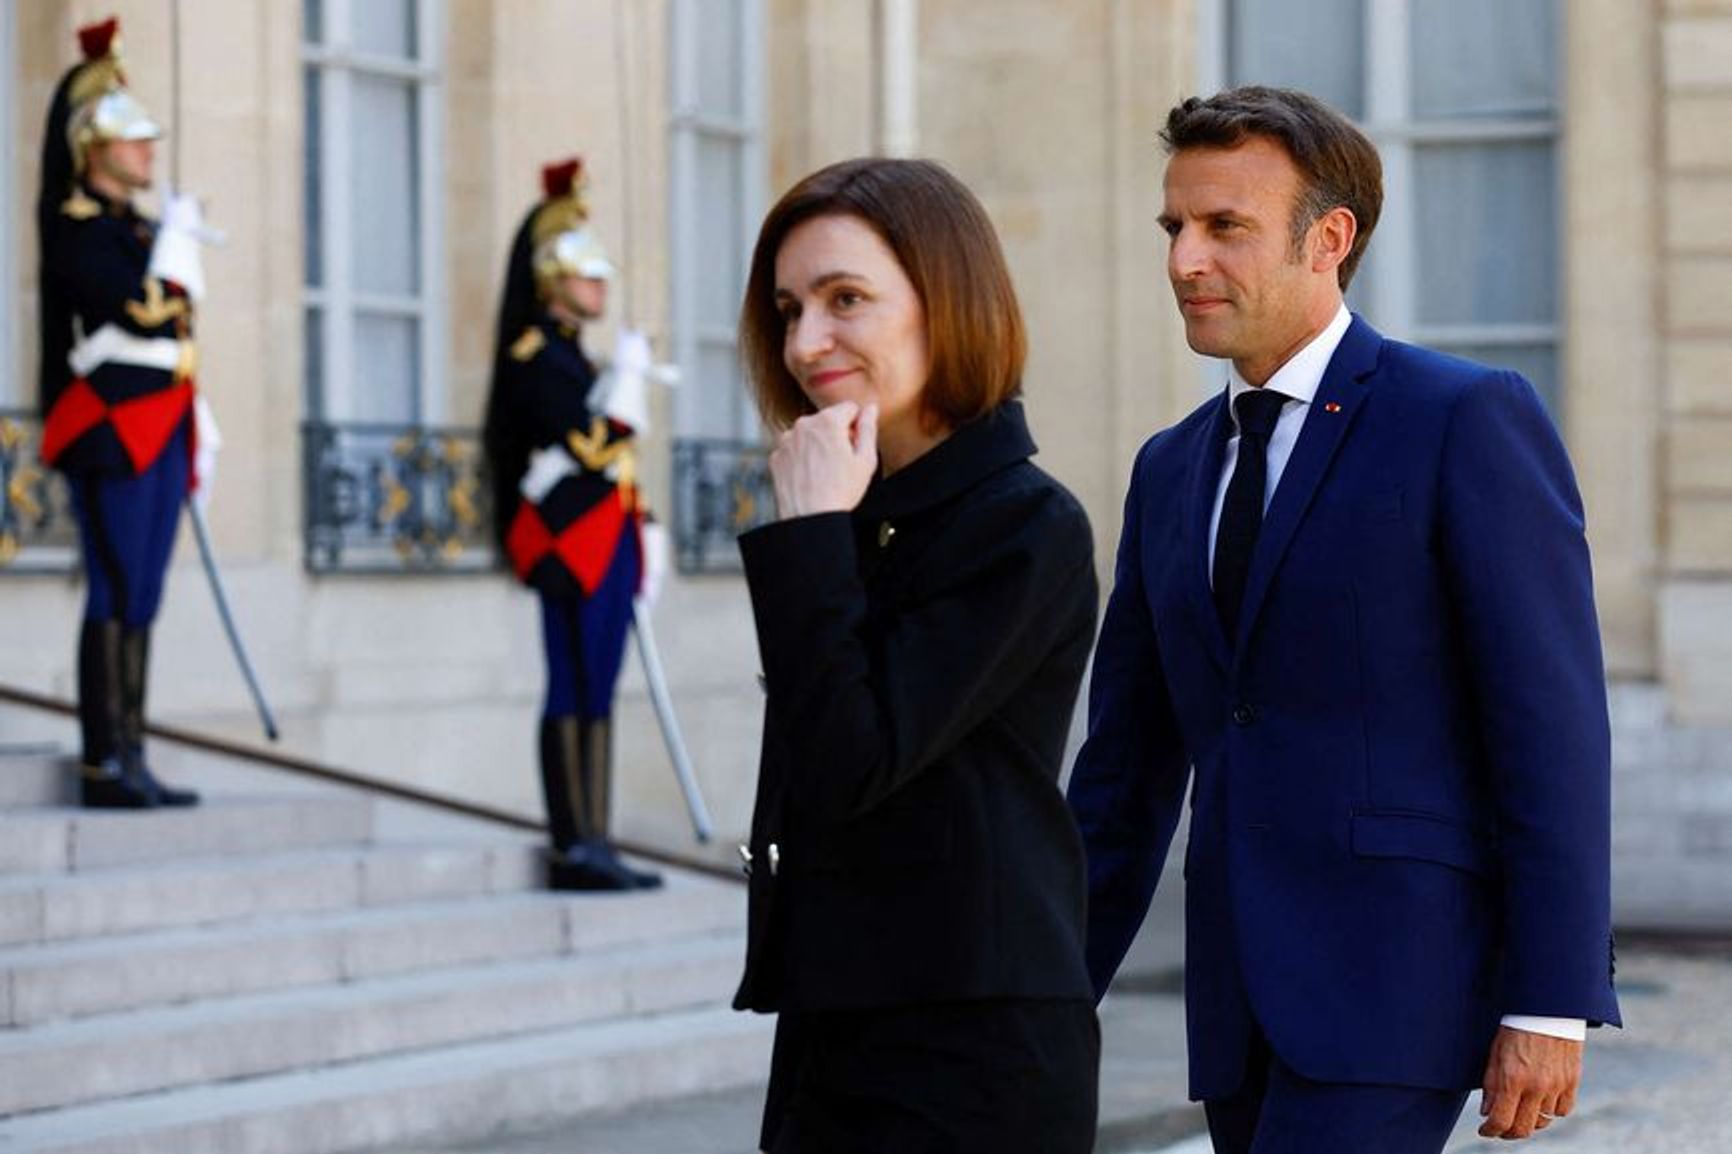 Emmanuel Macron welcomes Maia Sandu before a meeting at the Elysee Palace in Paris, France, May 19, 2022